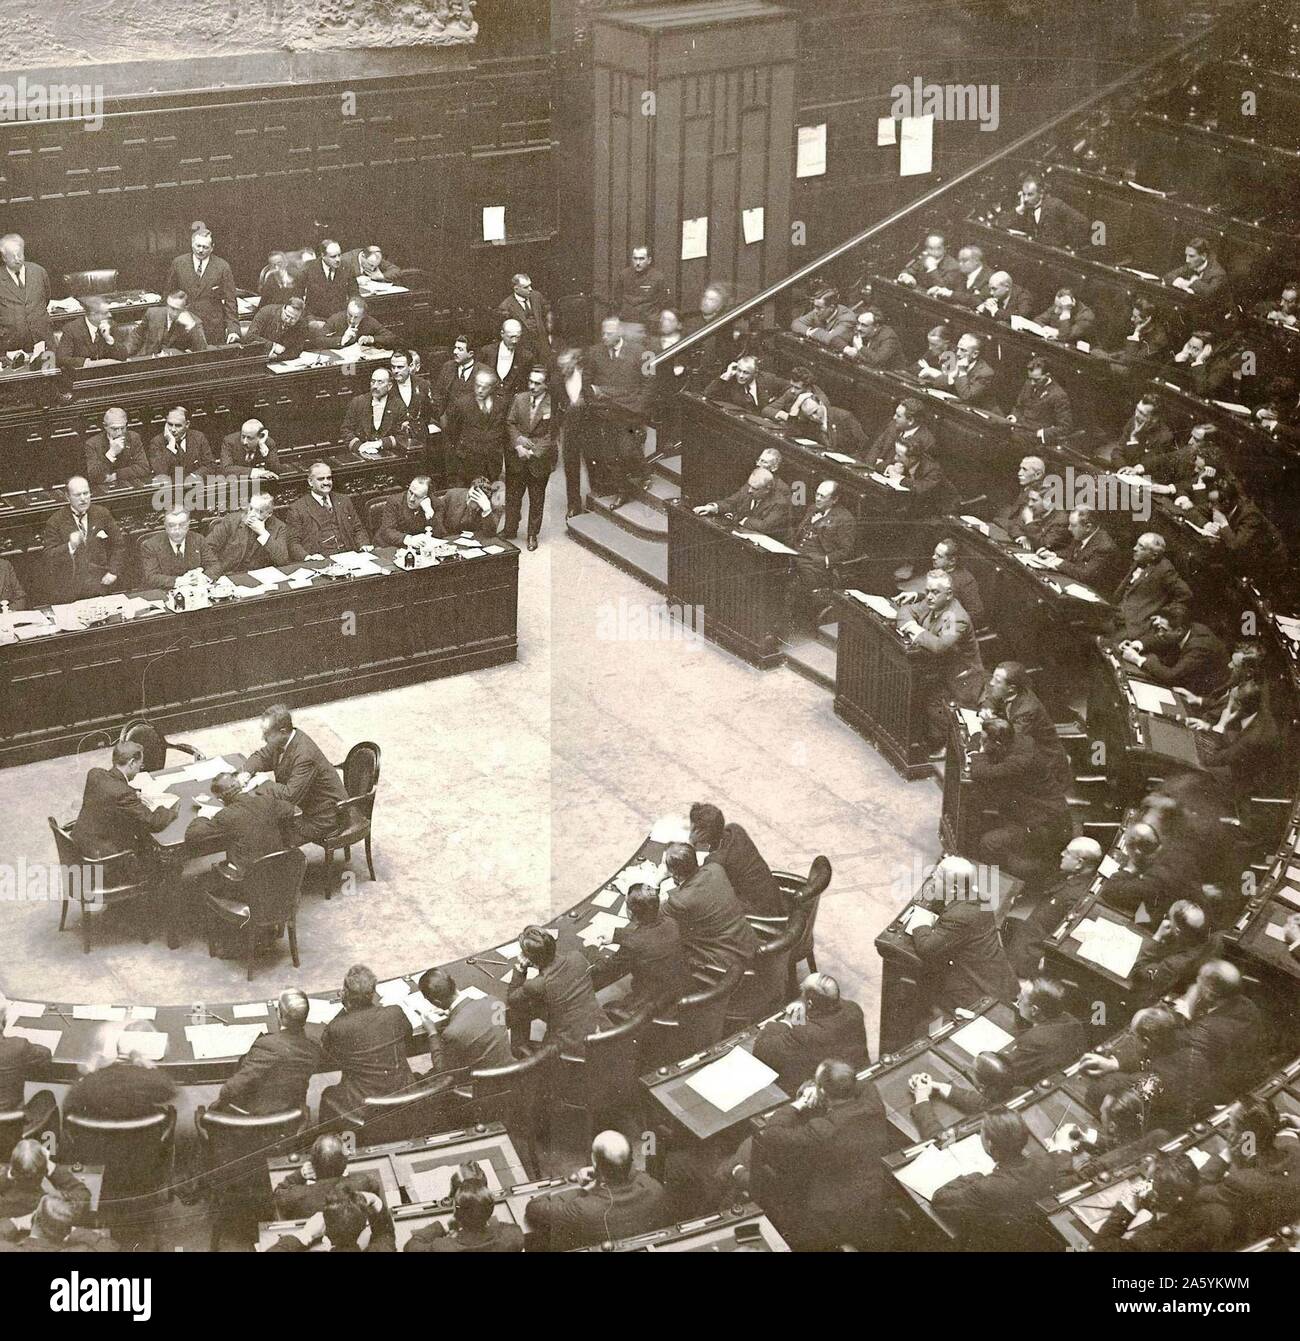 Benito Mussolini (1883-1945) Italian Fascist dictator, addressing the Italian Parliament c1932. Stock Photo